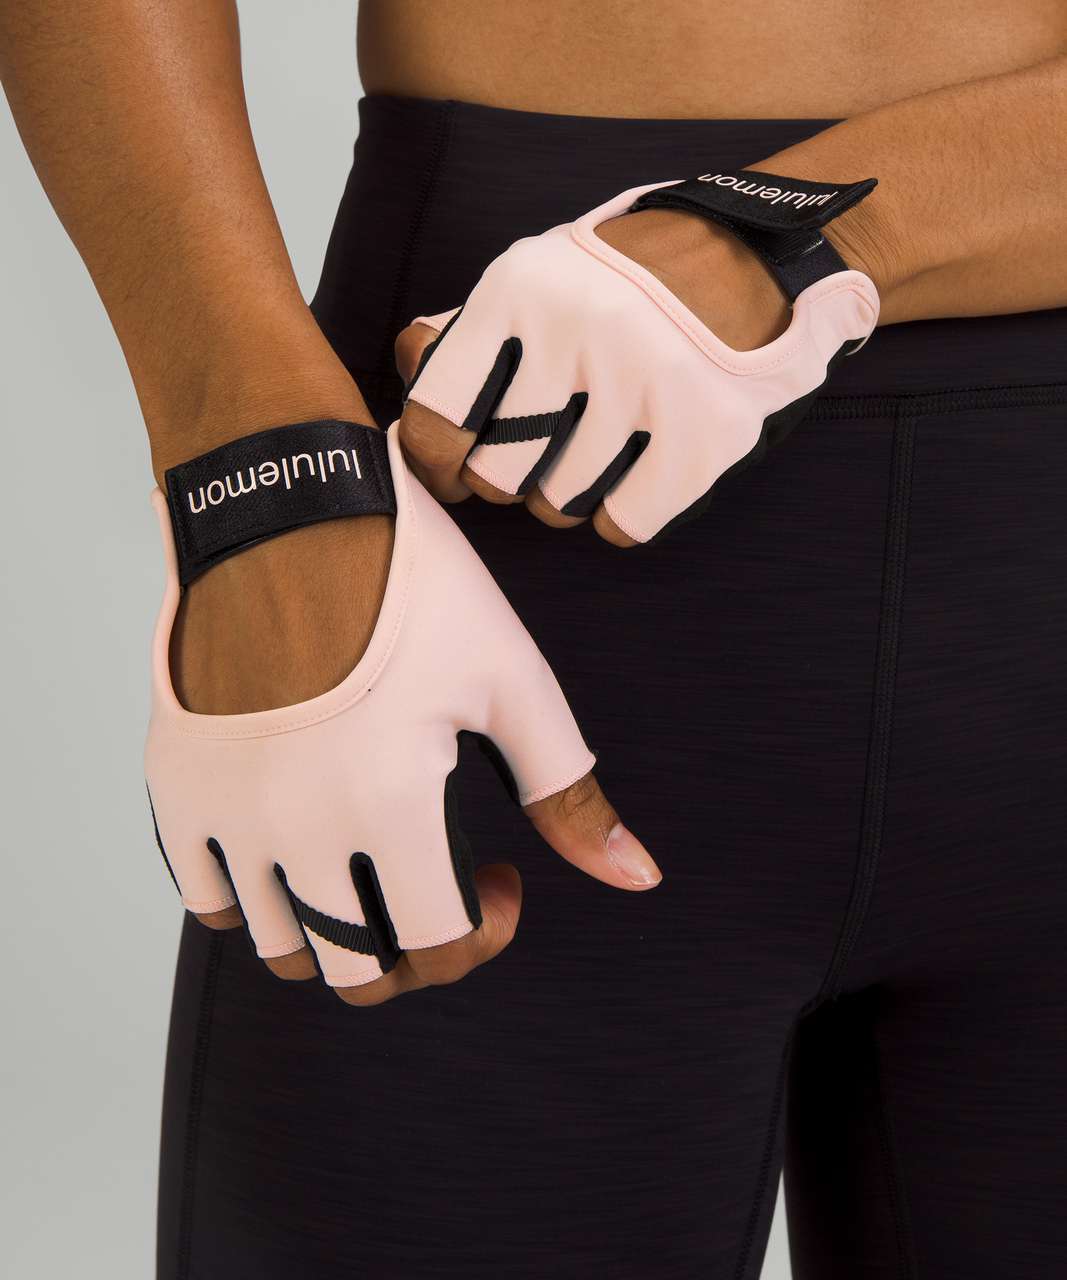 Lululemon Uplift Training Gloves - Pink Mist / Black